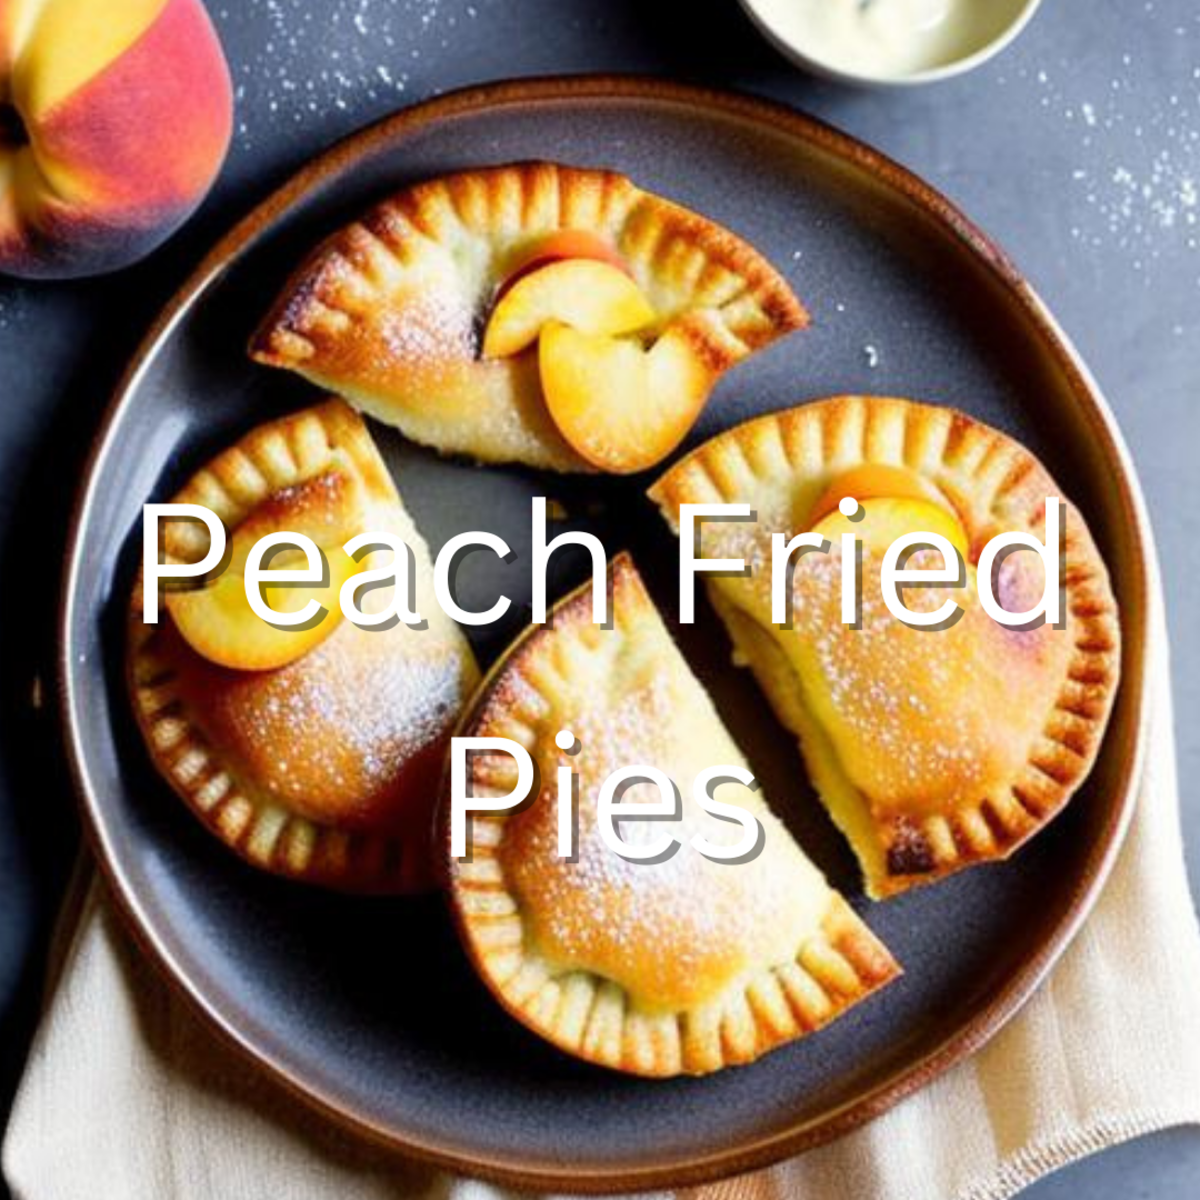 Peach Fried Pies